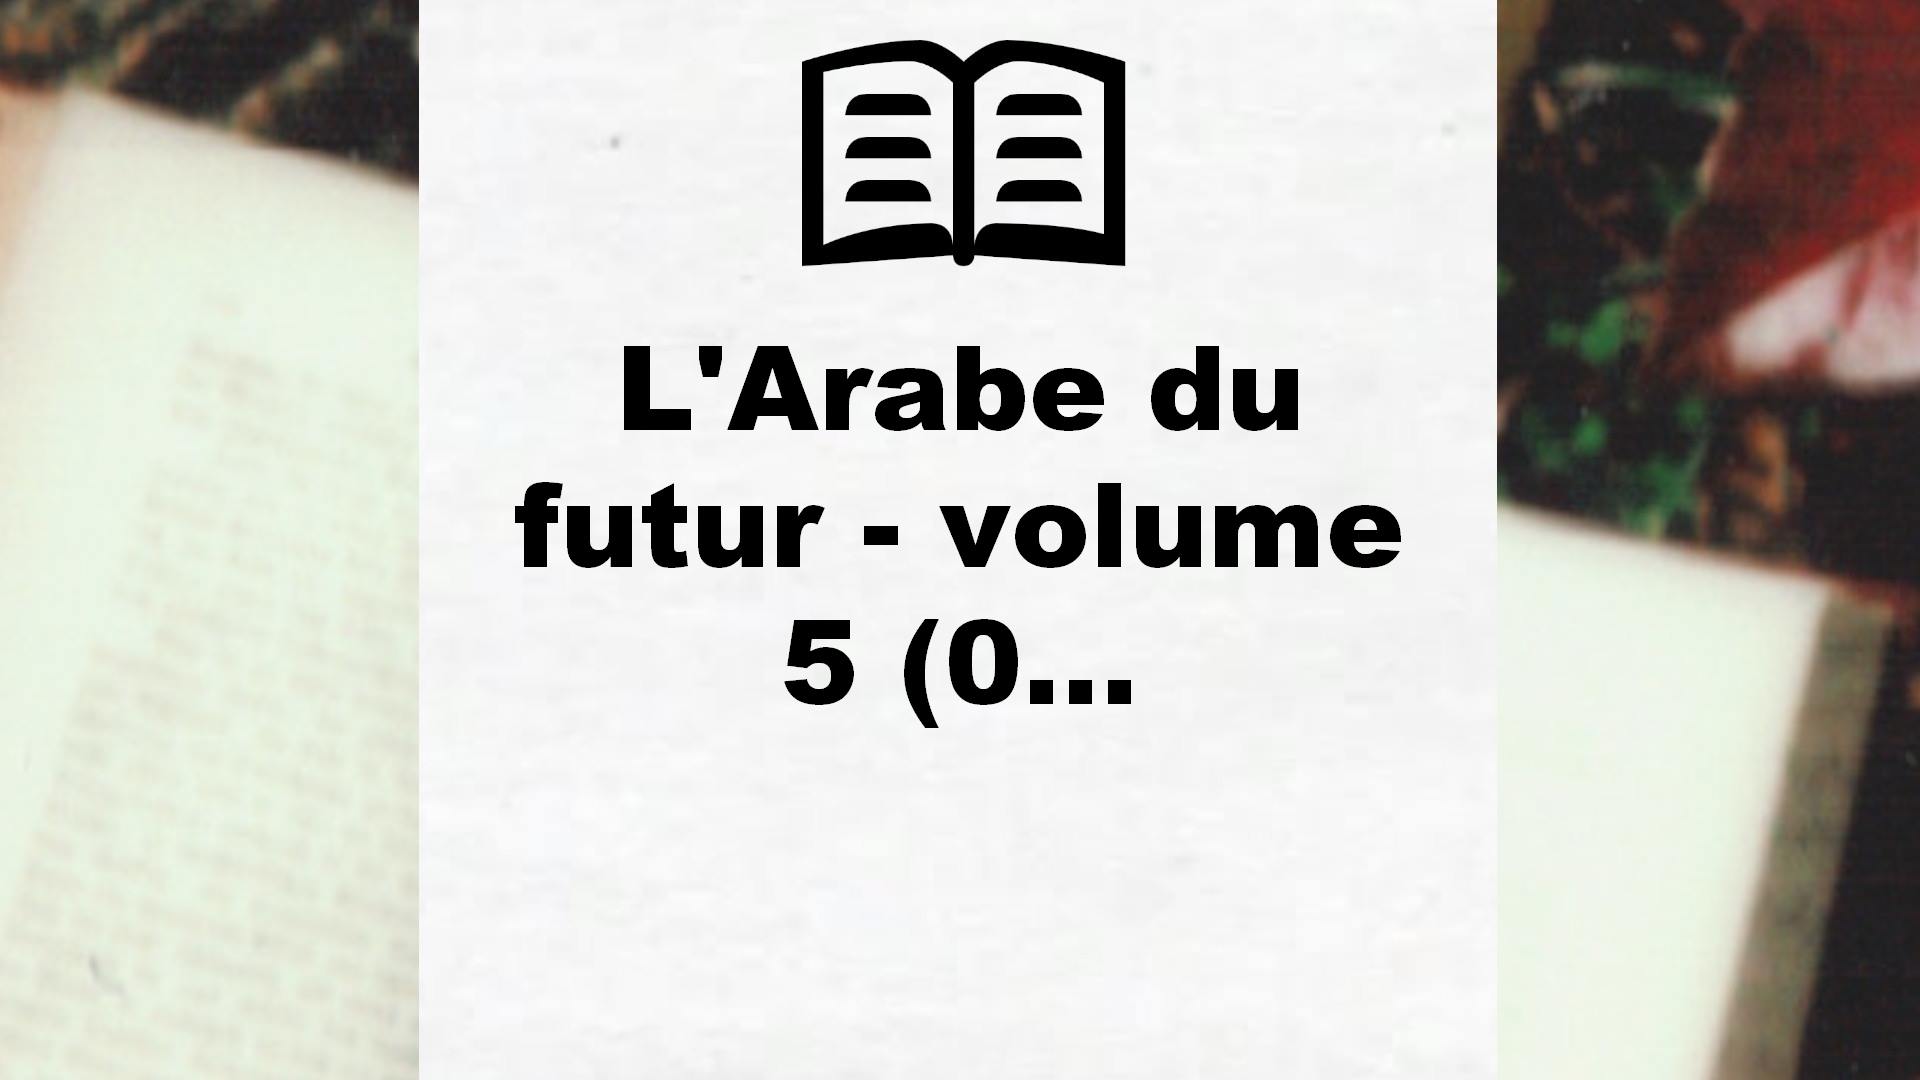 L’Arabe du futur – volume 5 (0… – Critique